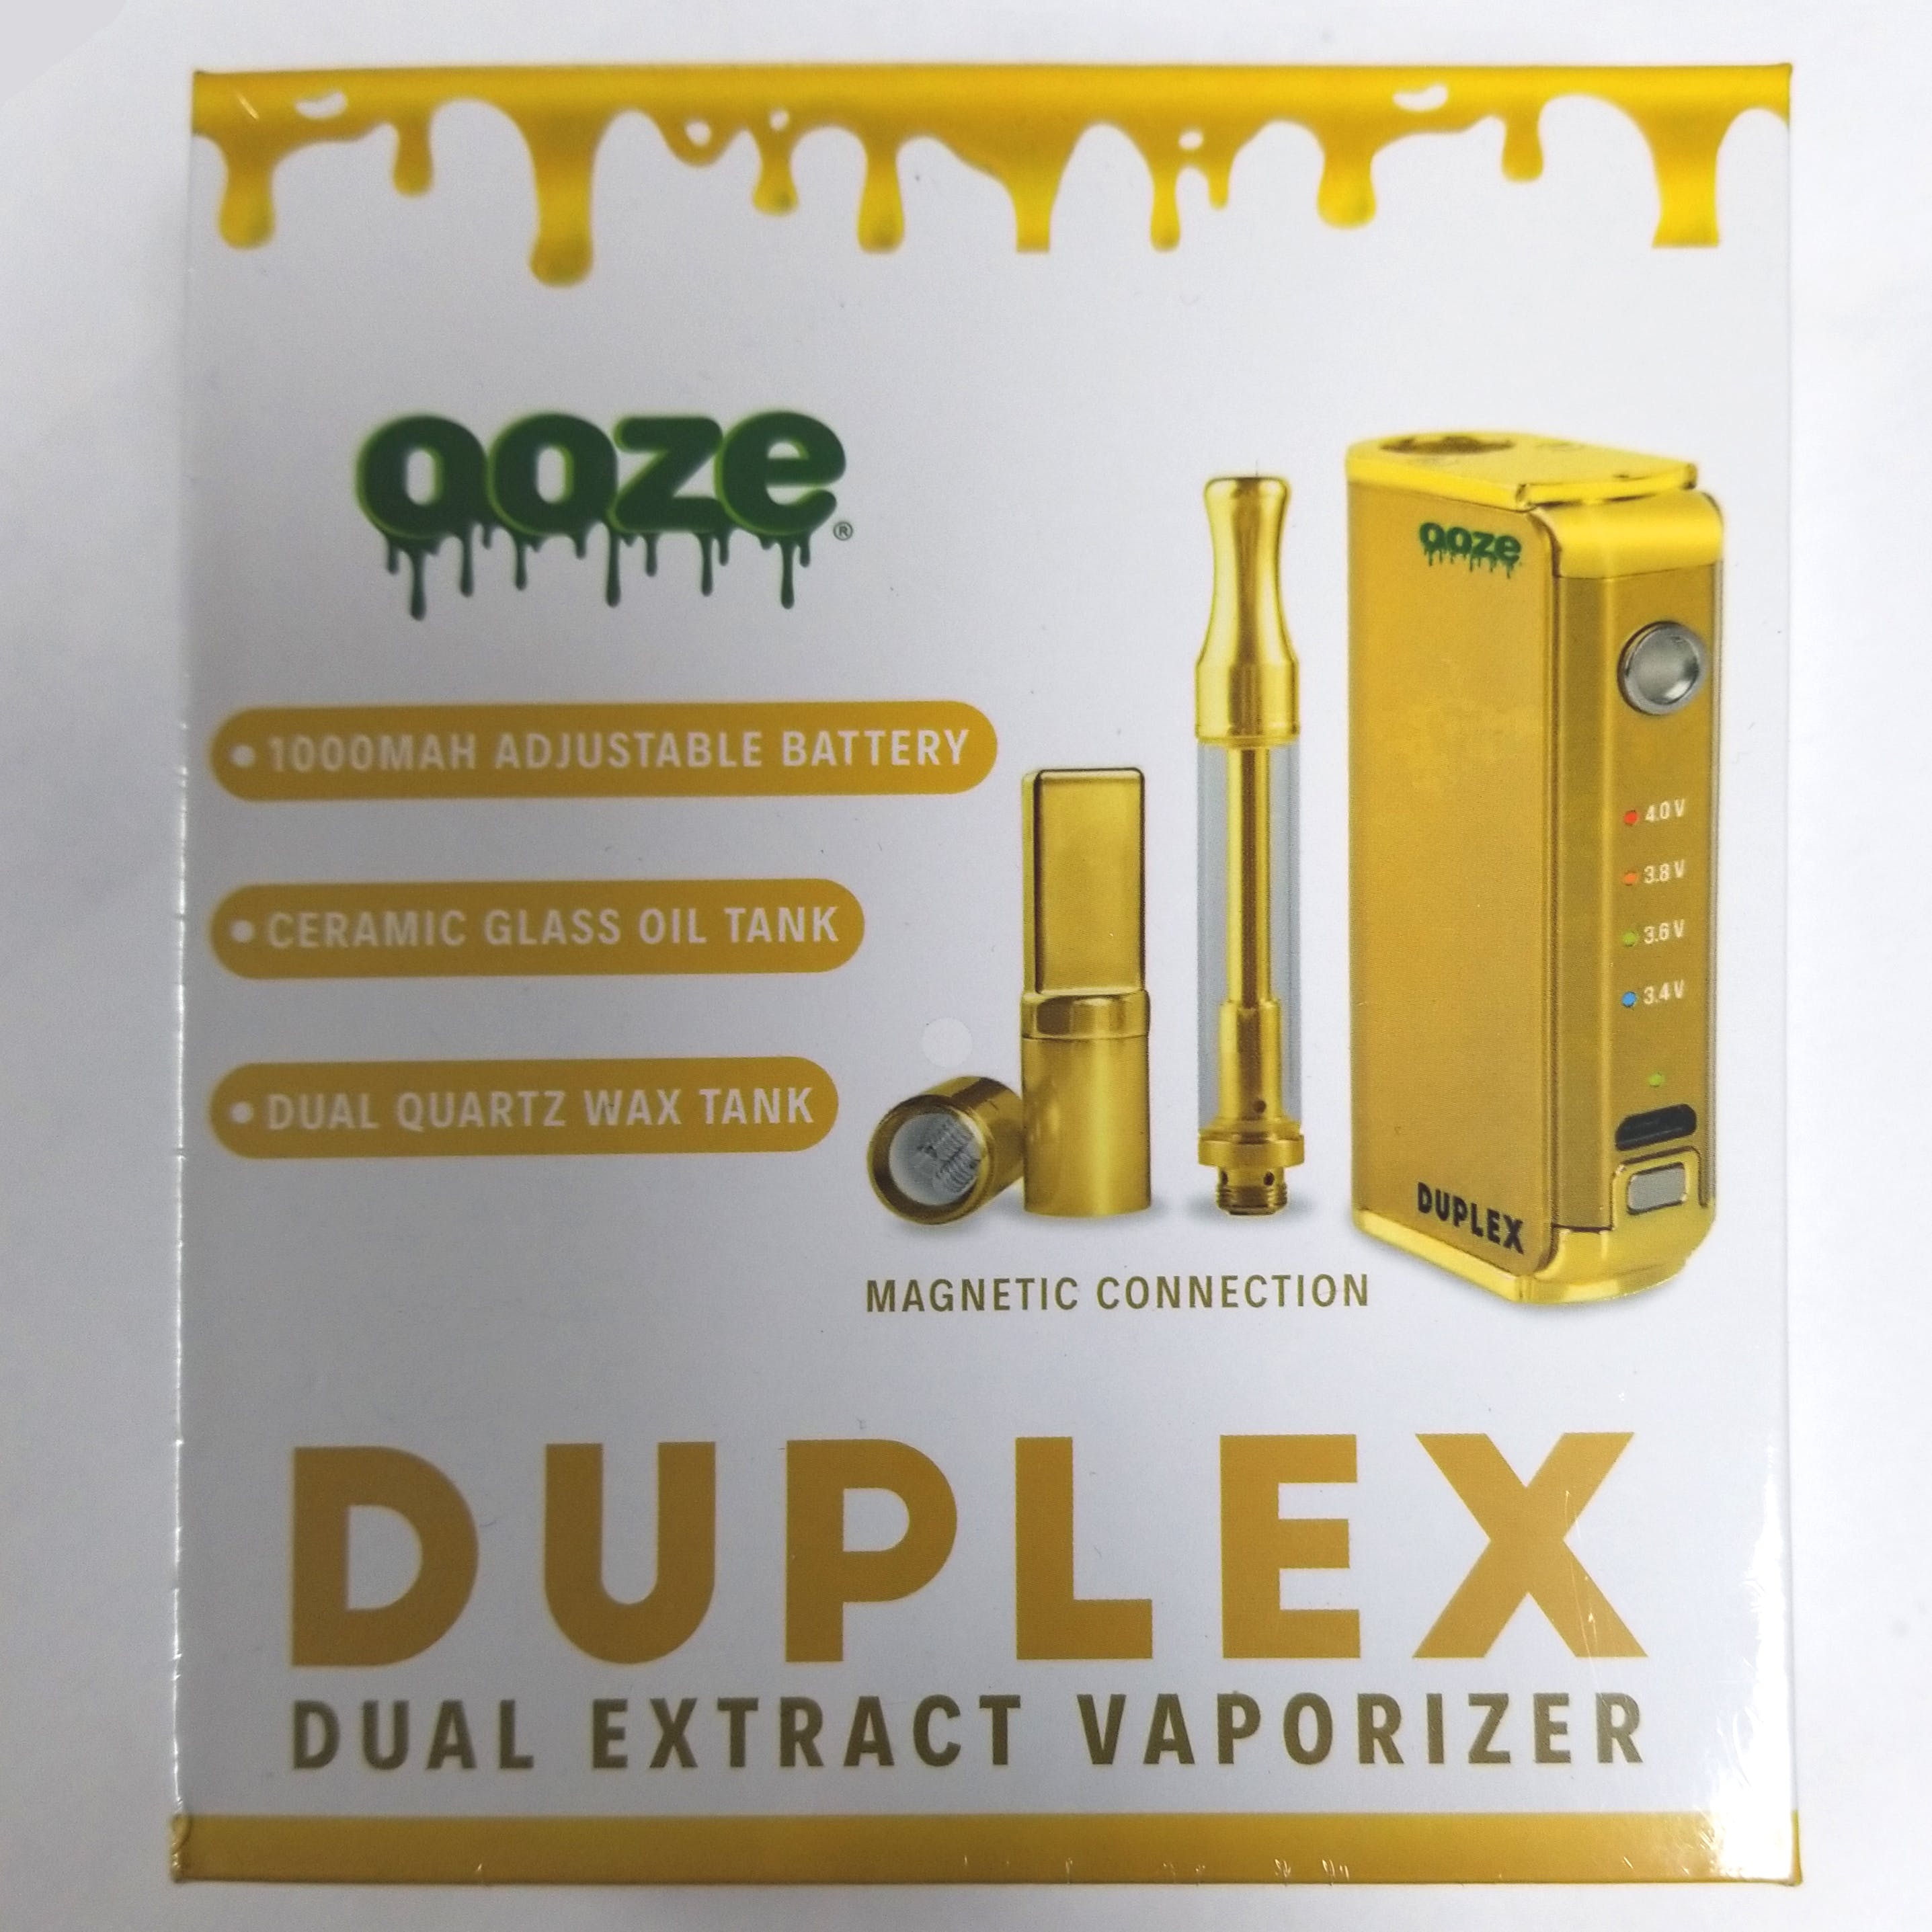 OOZE Duplex Dual Extract Vaporizor